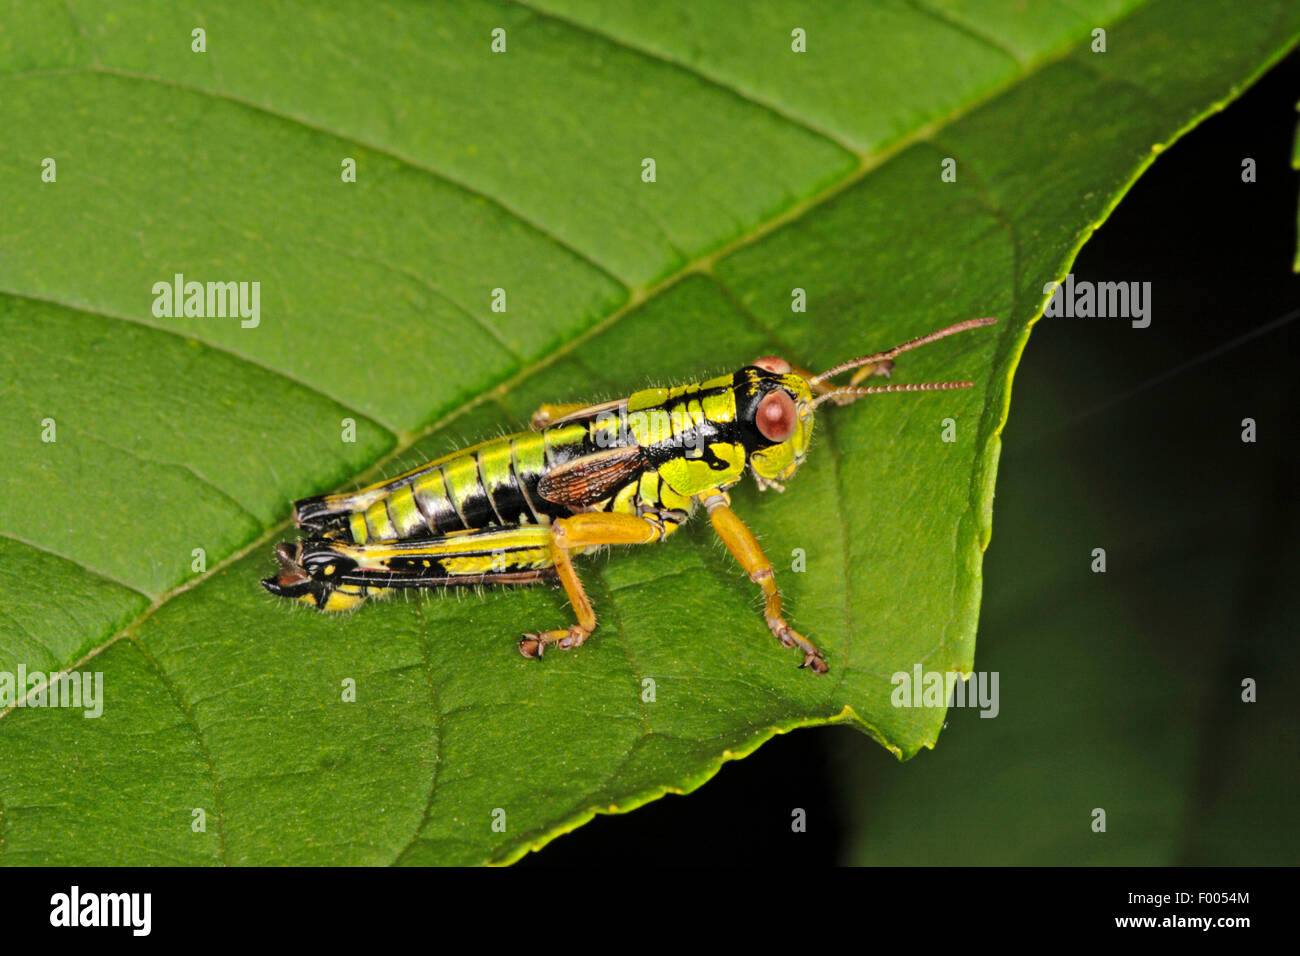 Green Mountain Grasshopper, Alpine mountain locust (Miramella alpina, Podisma alpina, Kisella alpina), on a leaf, Germany Stock Photo